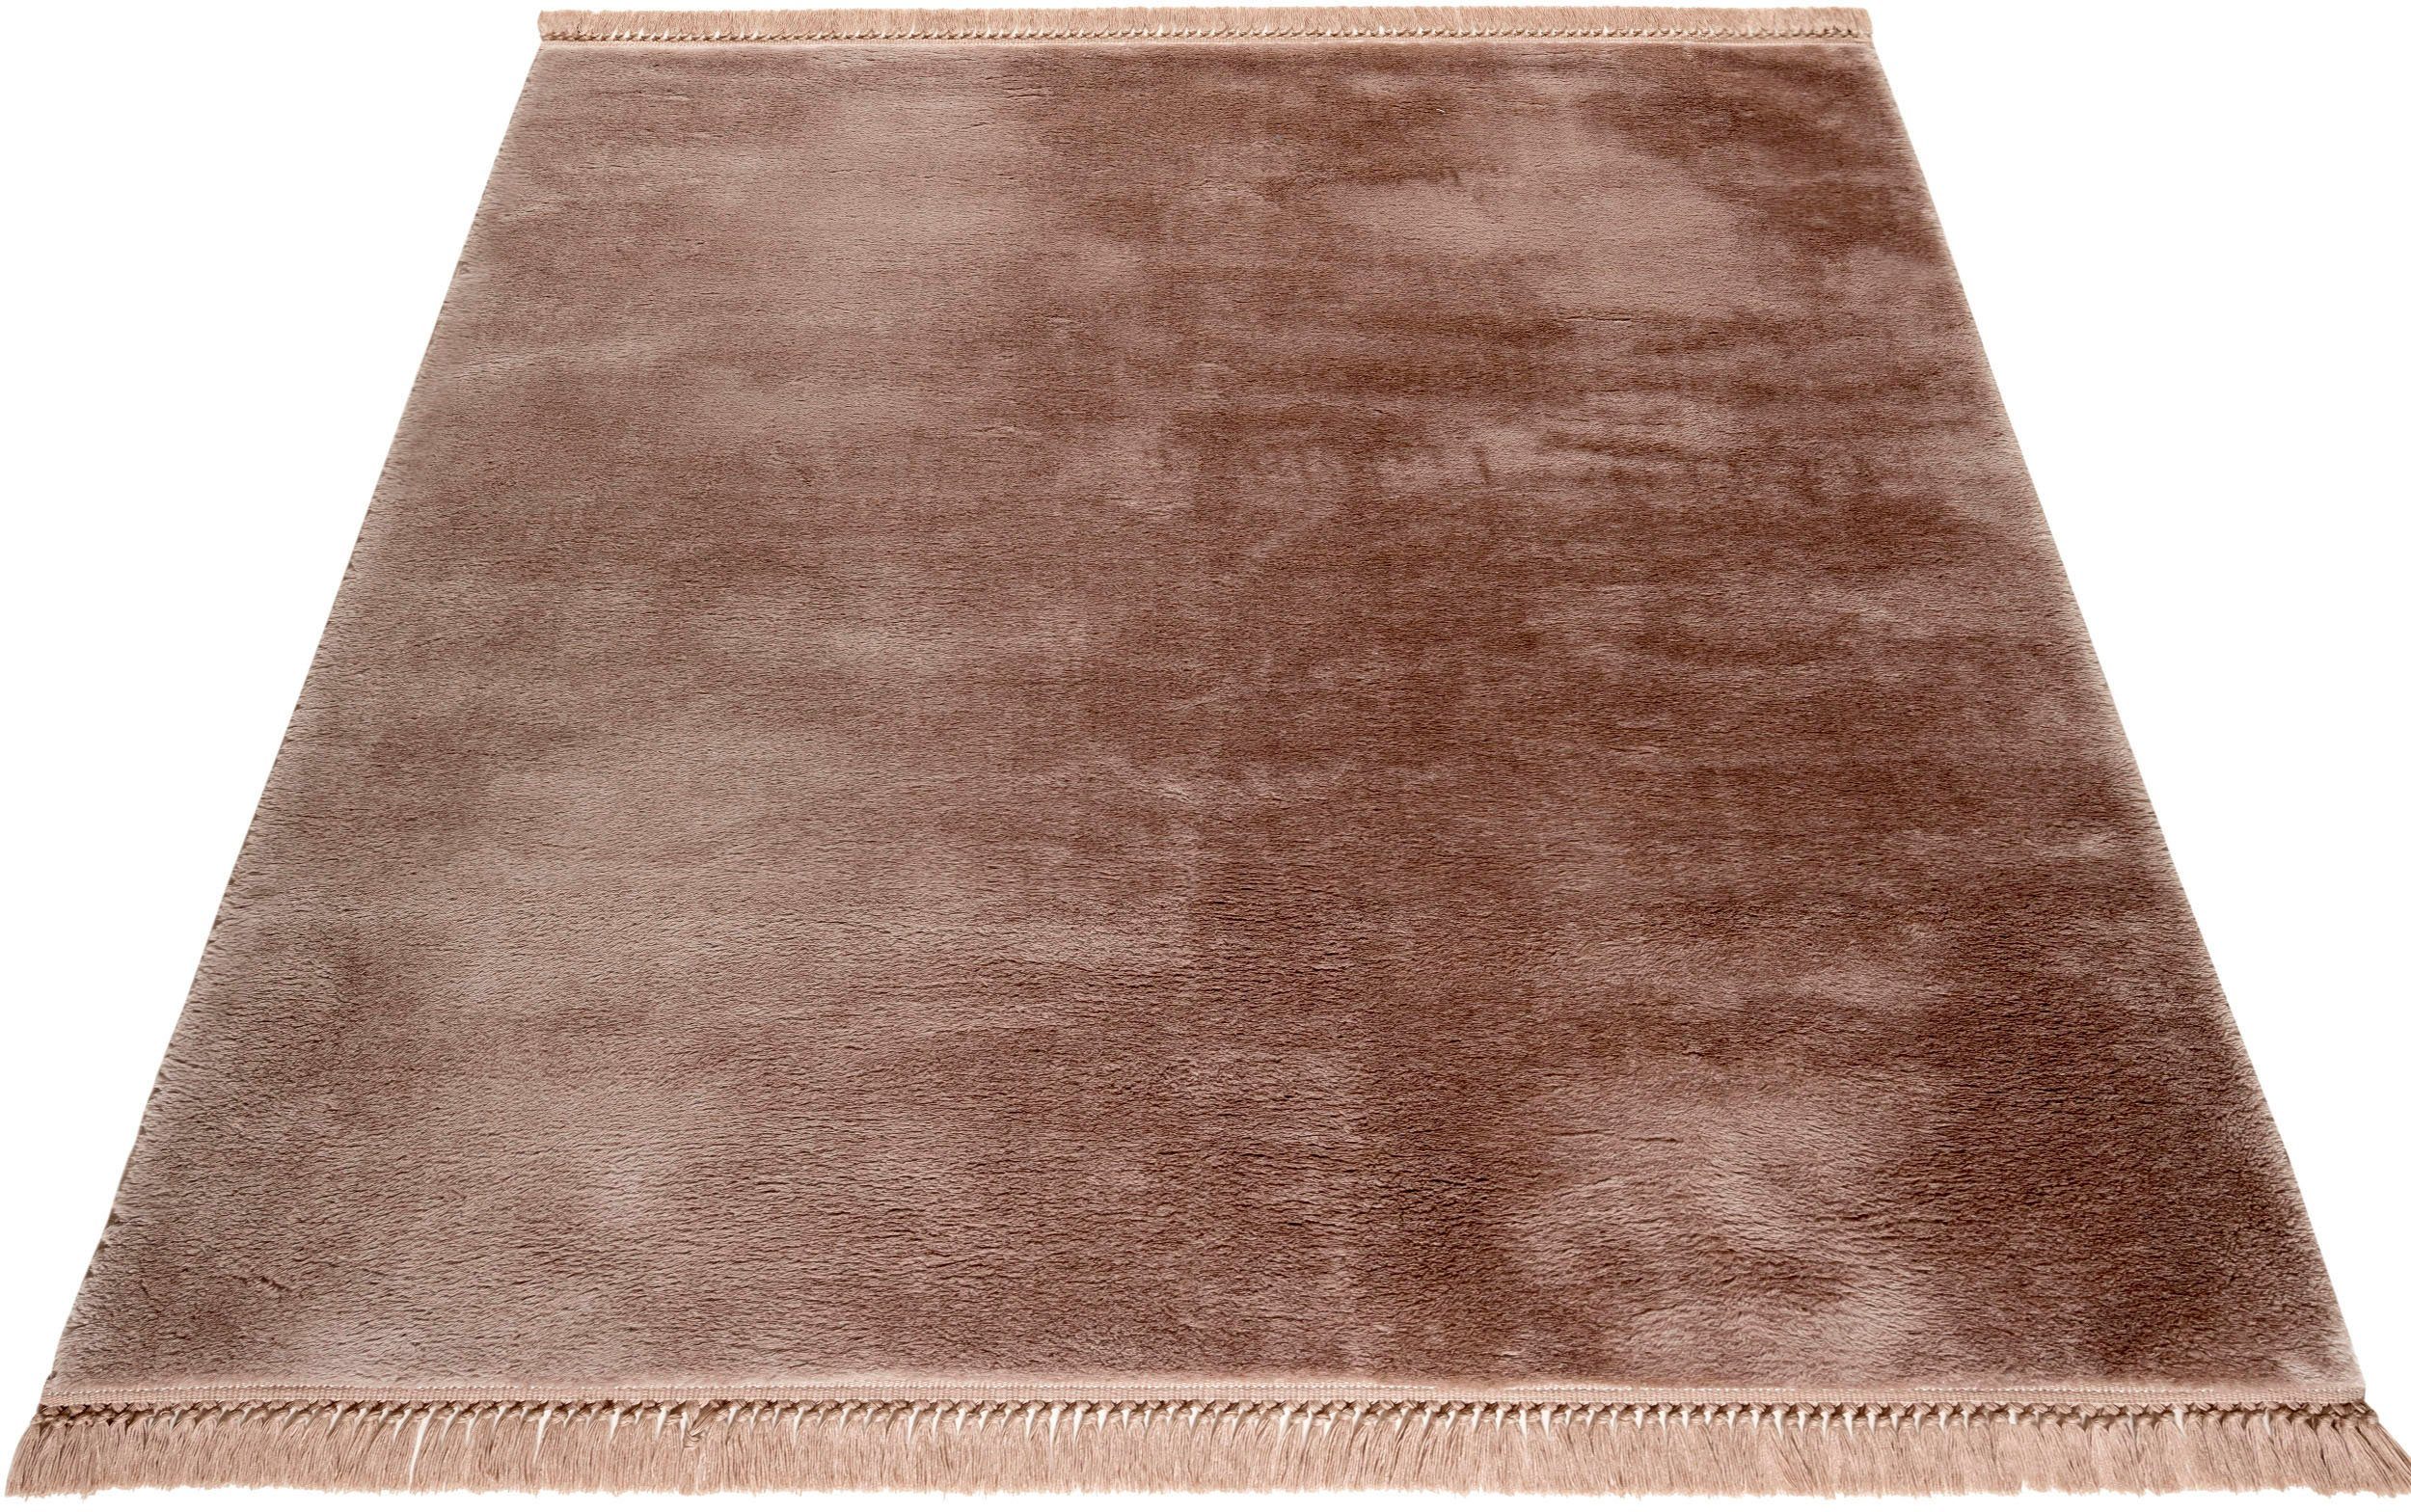 Hochflor-Teppich Soft mit Fransen, Sehrazat, rechteckig, Höhe: 25 mm,  Kunstfell, waschbar, kuschelweich, rutschhemmender Rücken